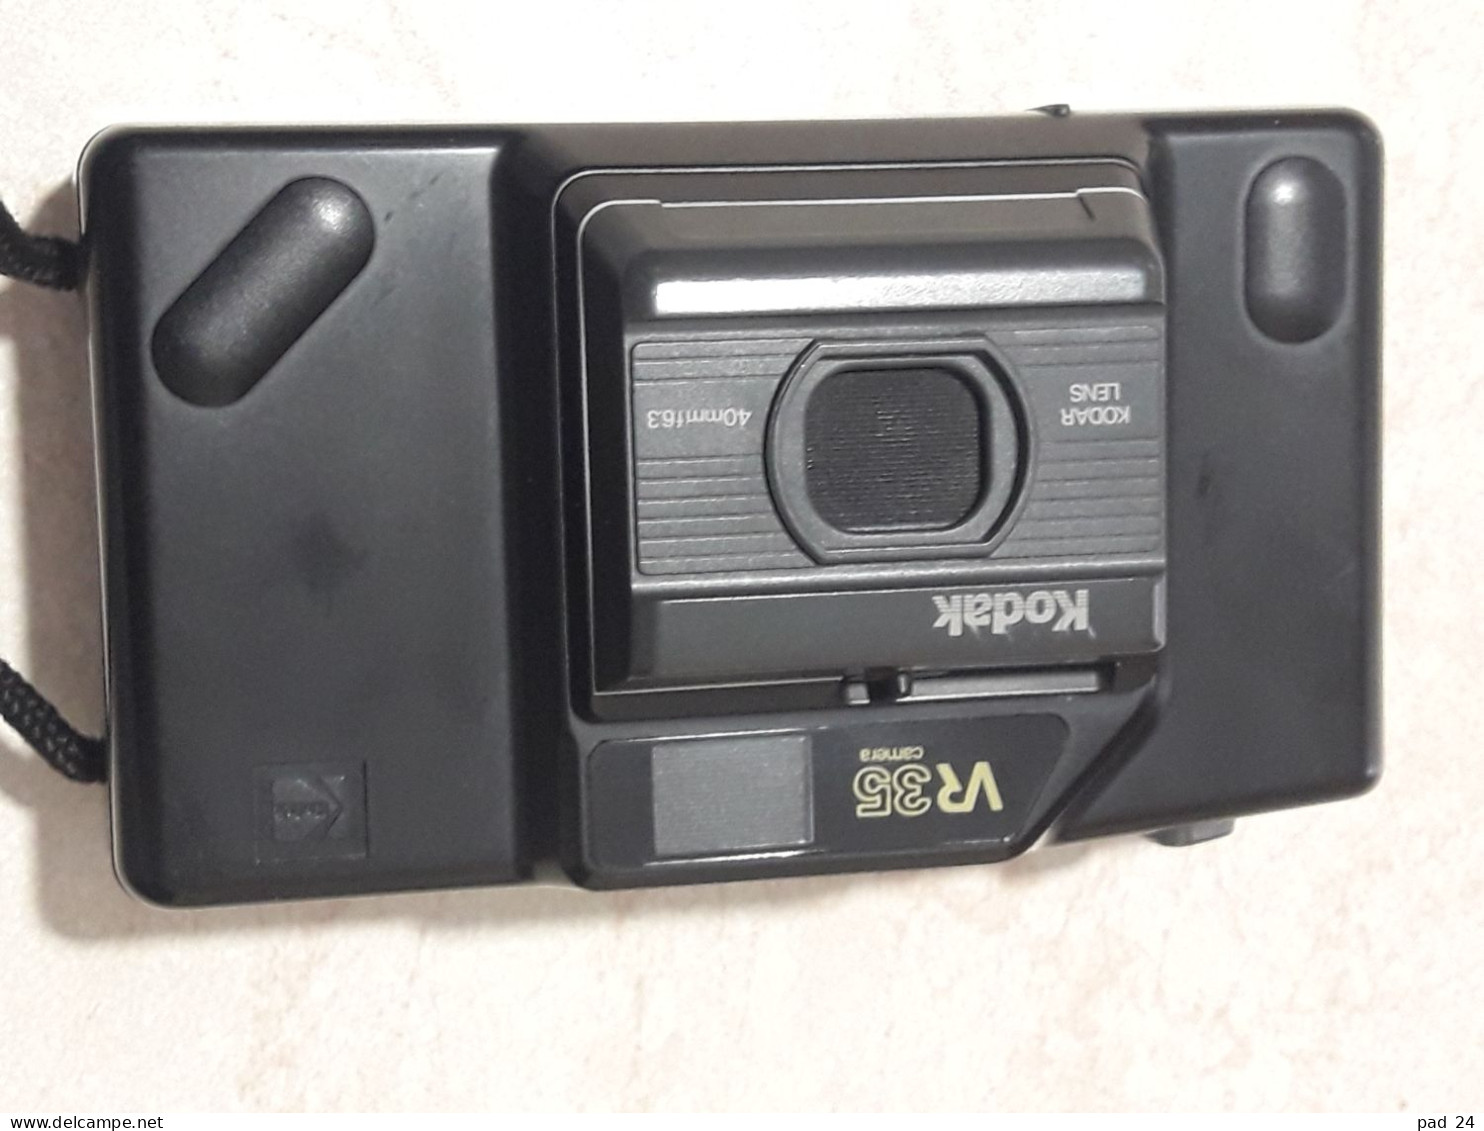 .Kodak VR35 K2A - point and shoot κάμερα φιλμ 35mm. (Είναι λειτουργικη, δεν γνωρίζω αν λειτουργεί καλα?)